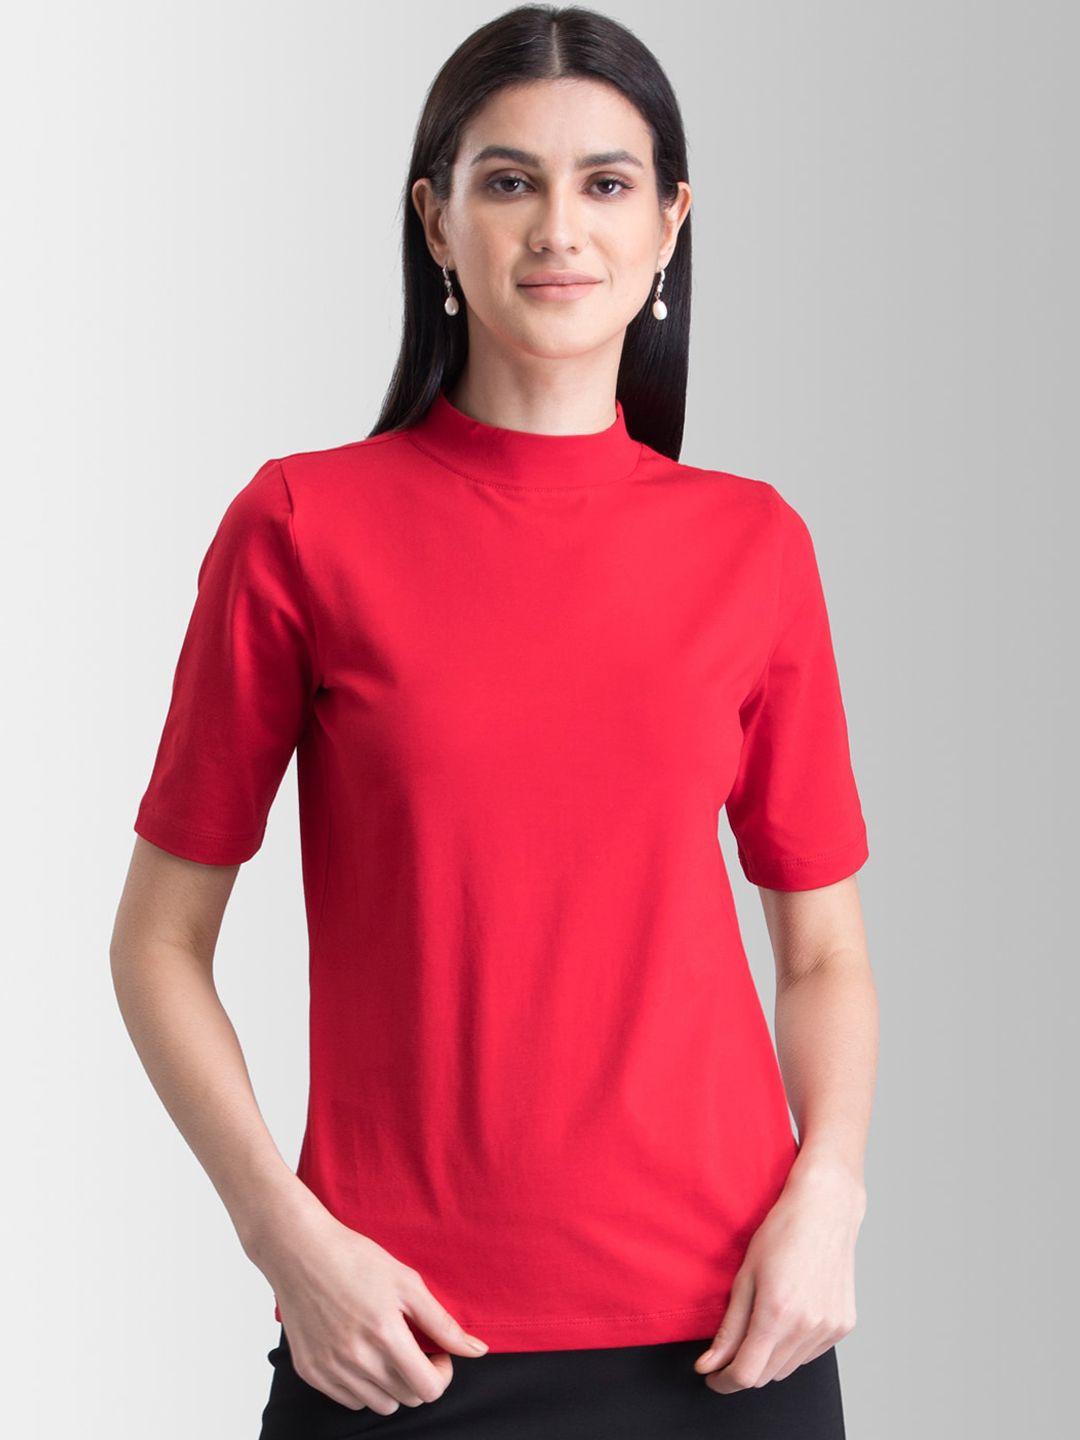 fablestreet women red solid v-neck t-shirt